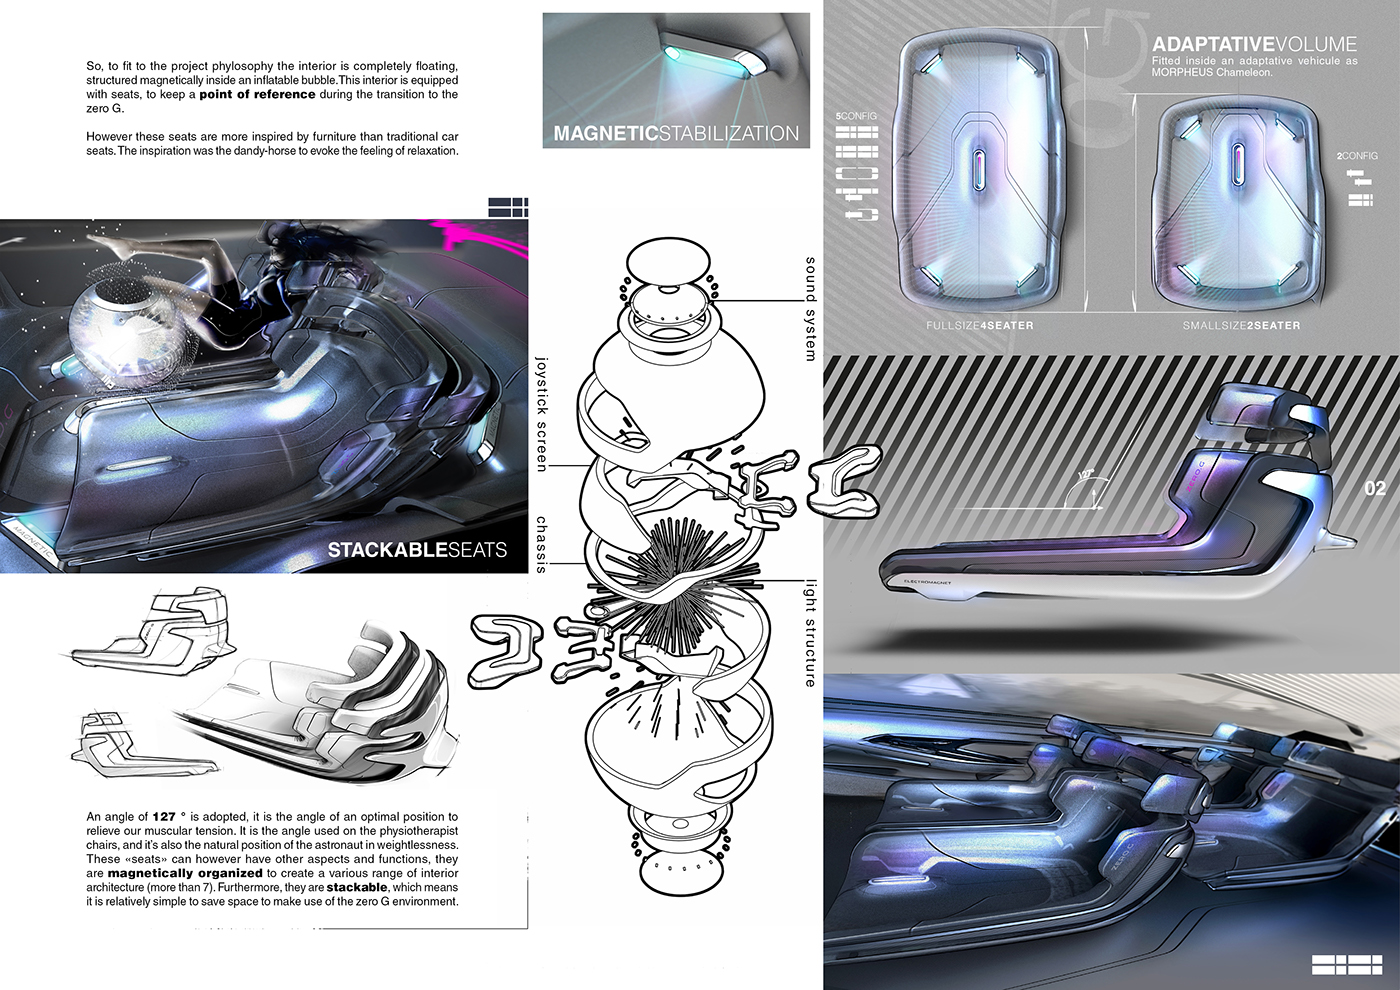 BMW yda zero gravity chameleon morpheus Fly futuristic concept car